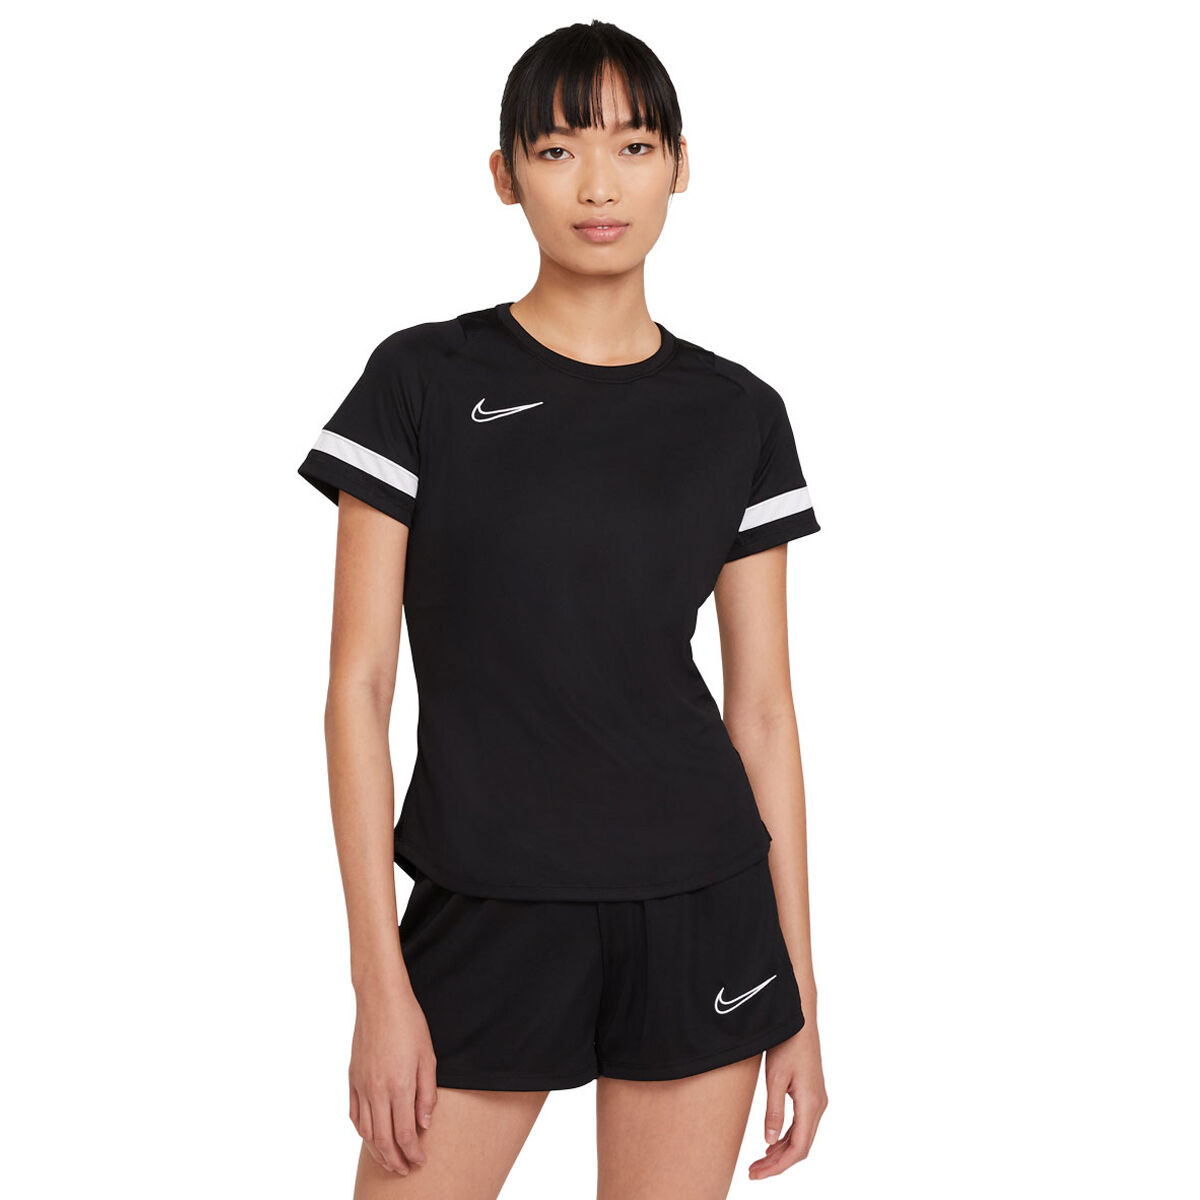 Nike Womens Tank Top Black Gold Dri Fit Athletic Running Shirt Small